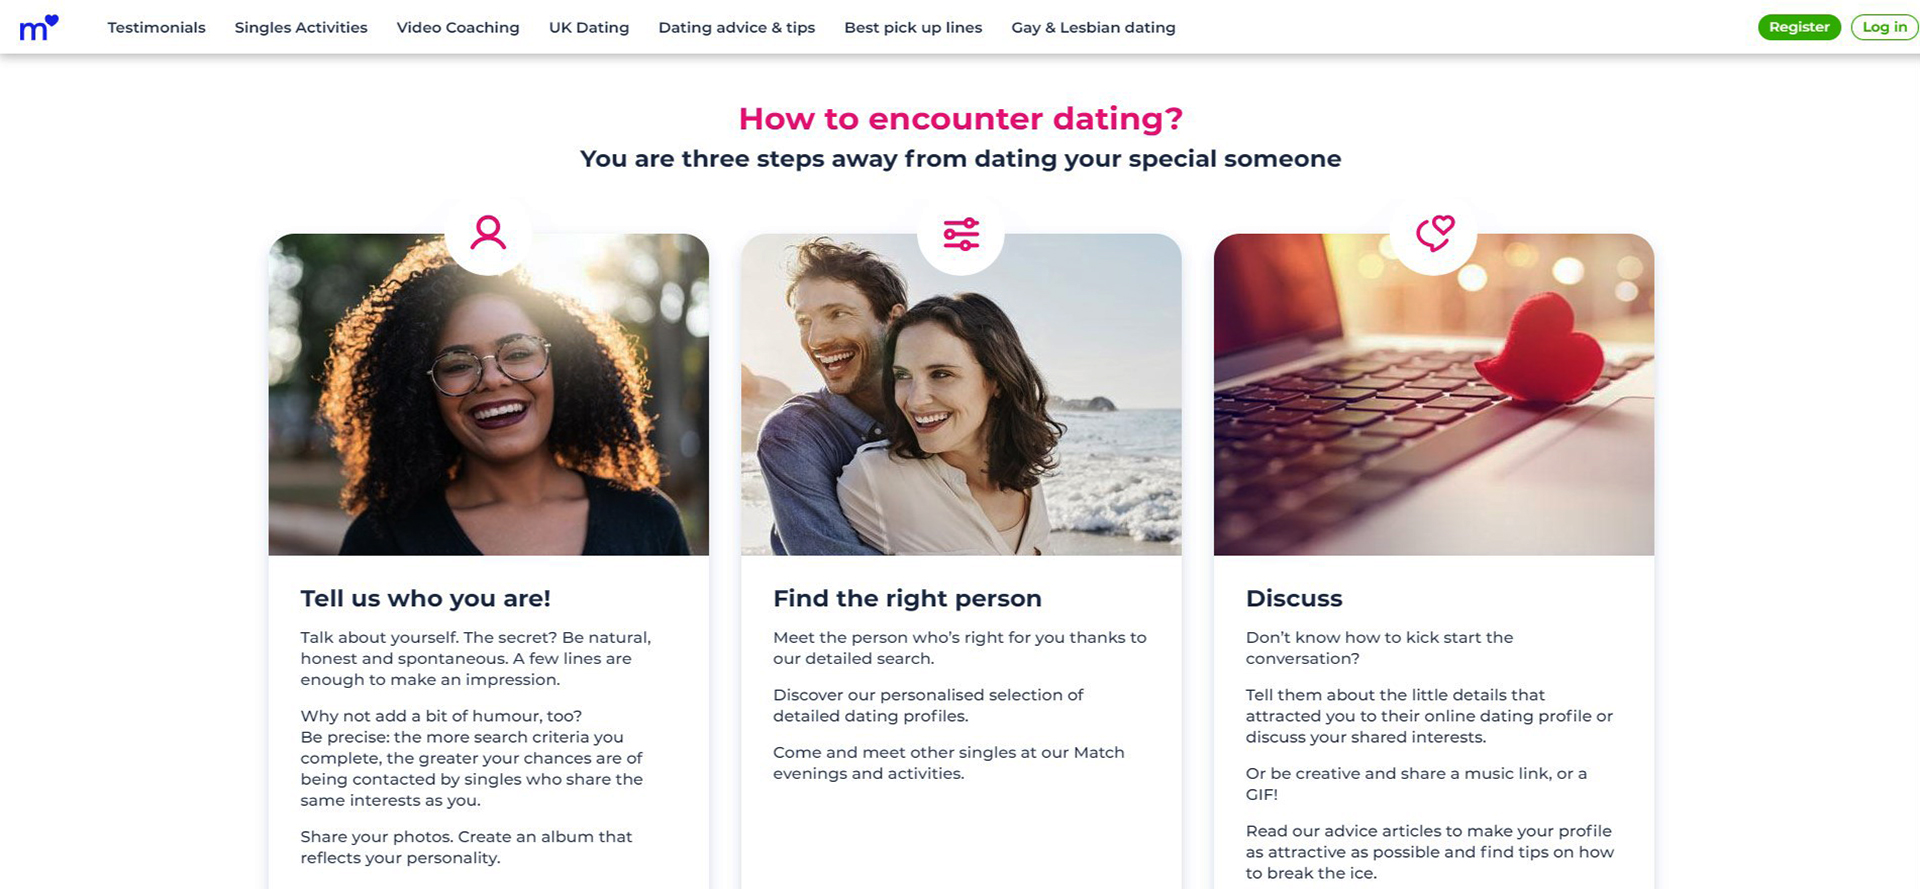 Match.com Dating Advice.